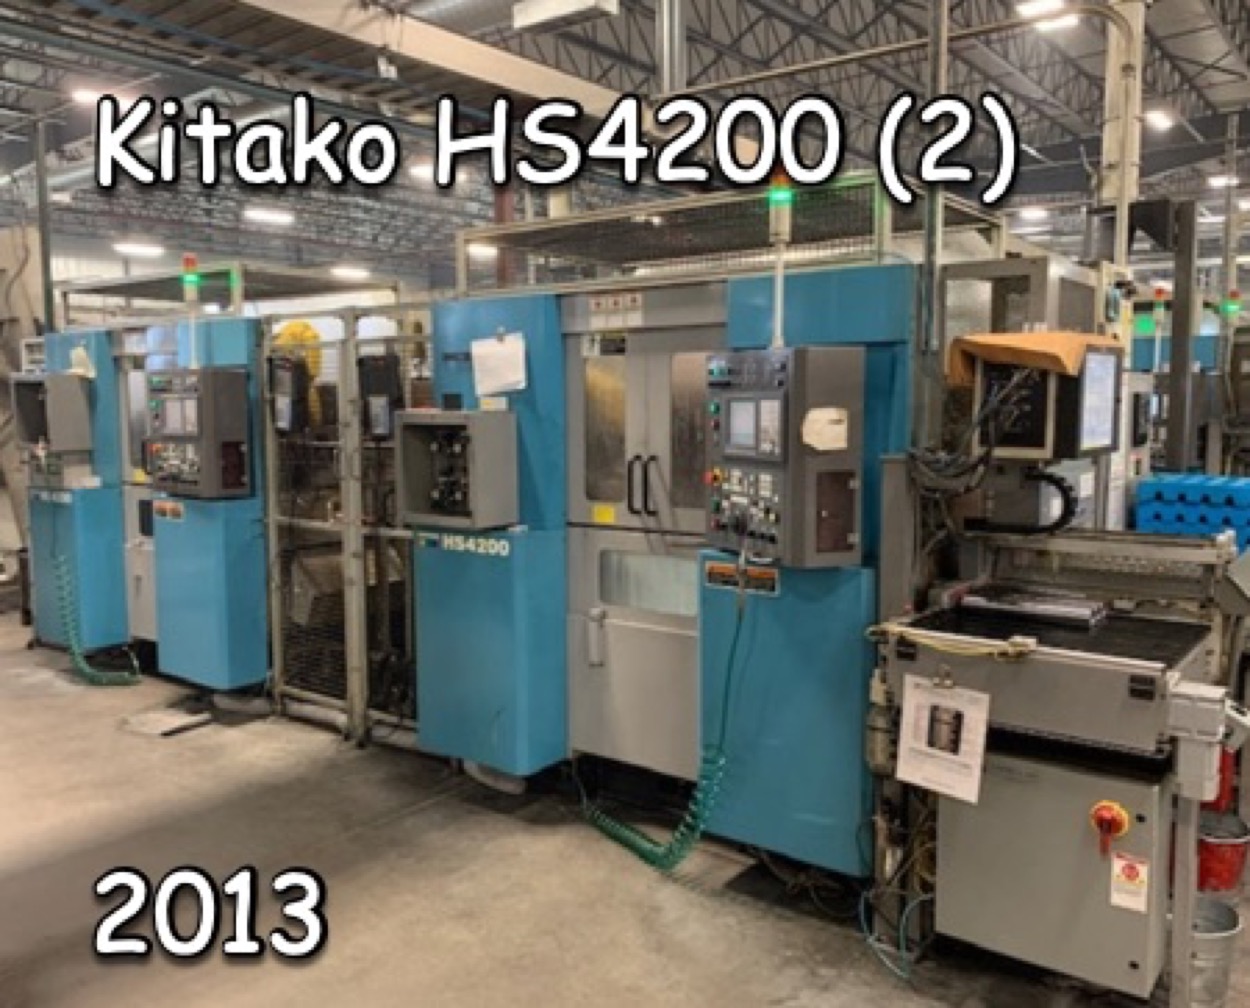 Kitako Kitako HS-4200n 2013